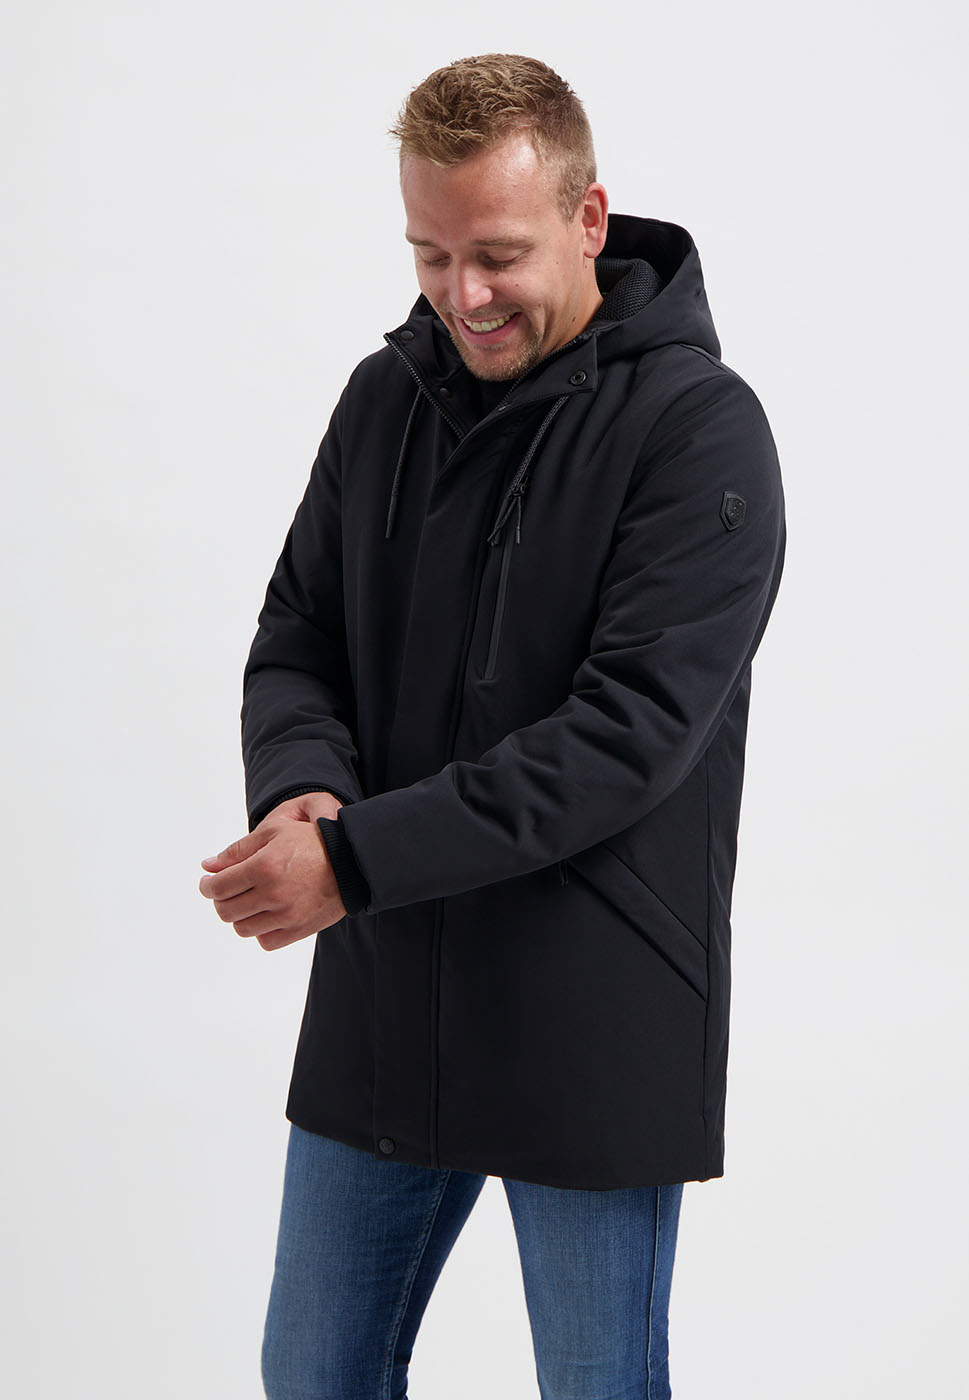 Kjelvik Scandinavian Clothing - Men Jackets Gaston Black